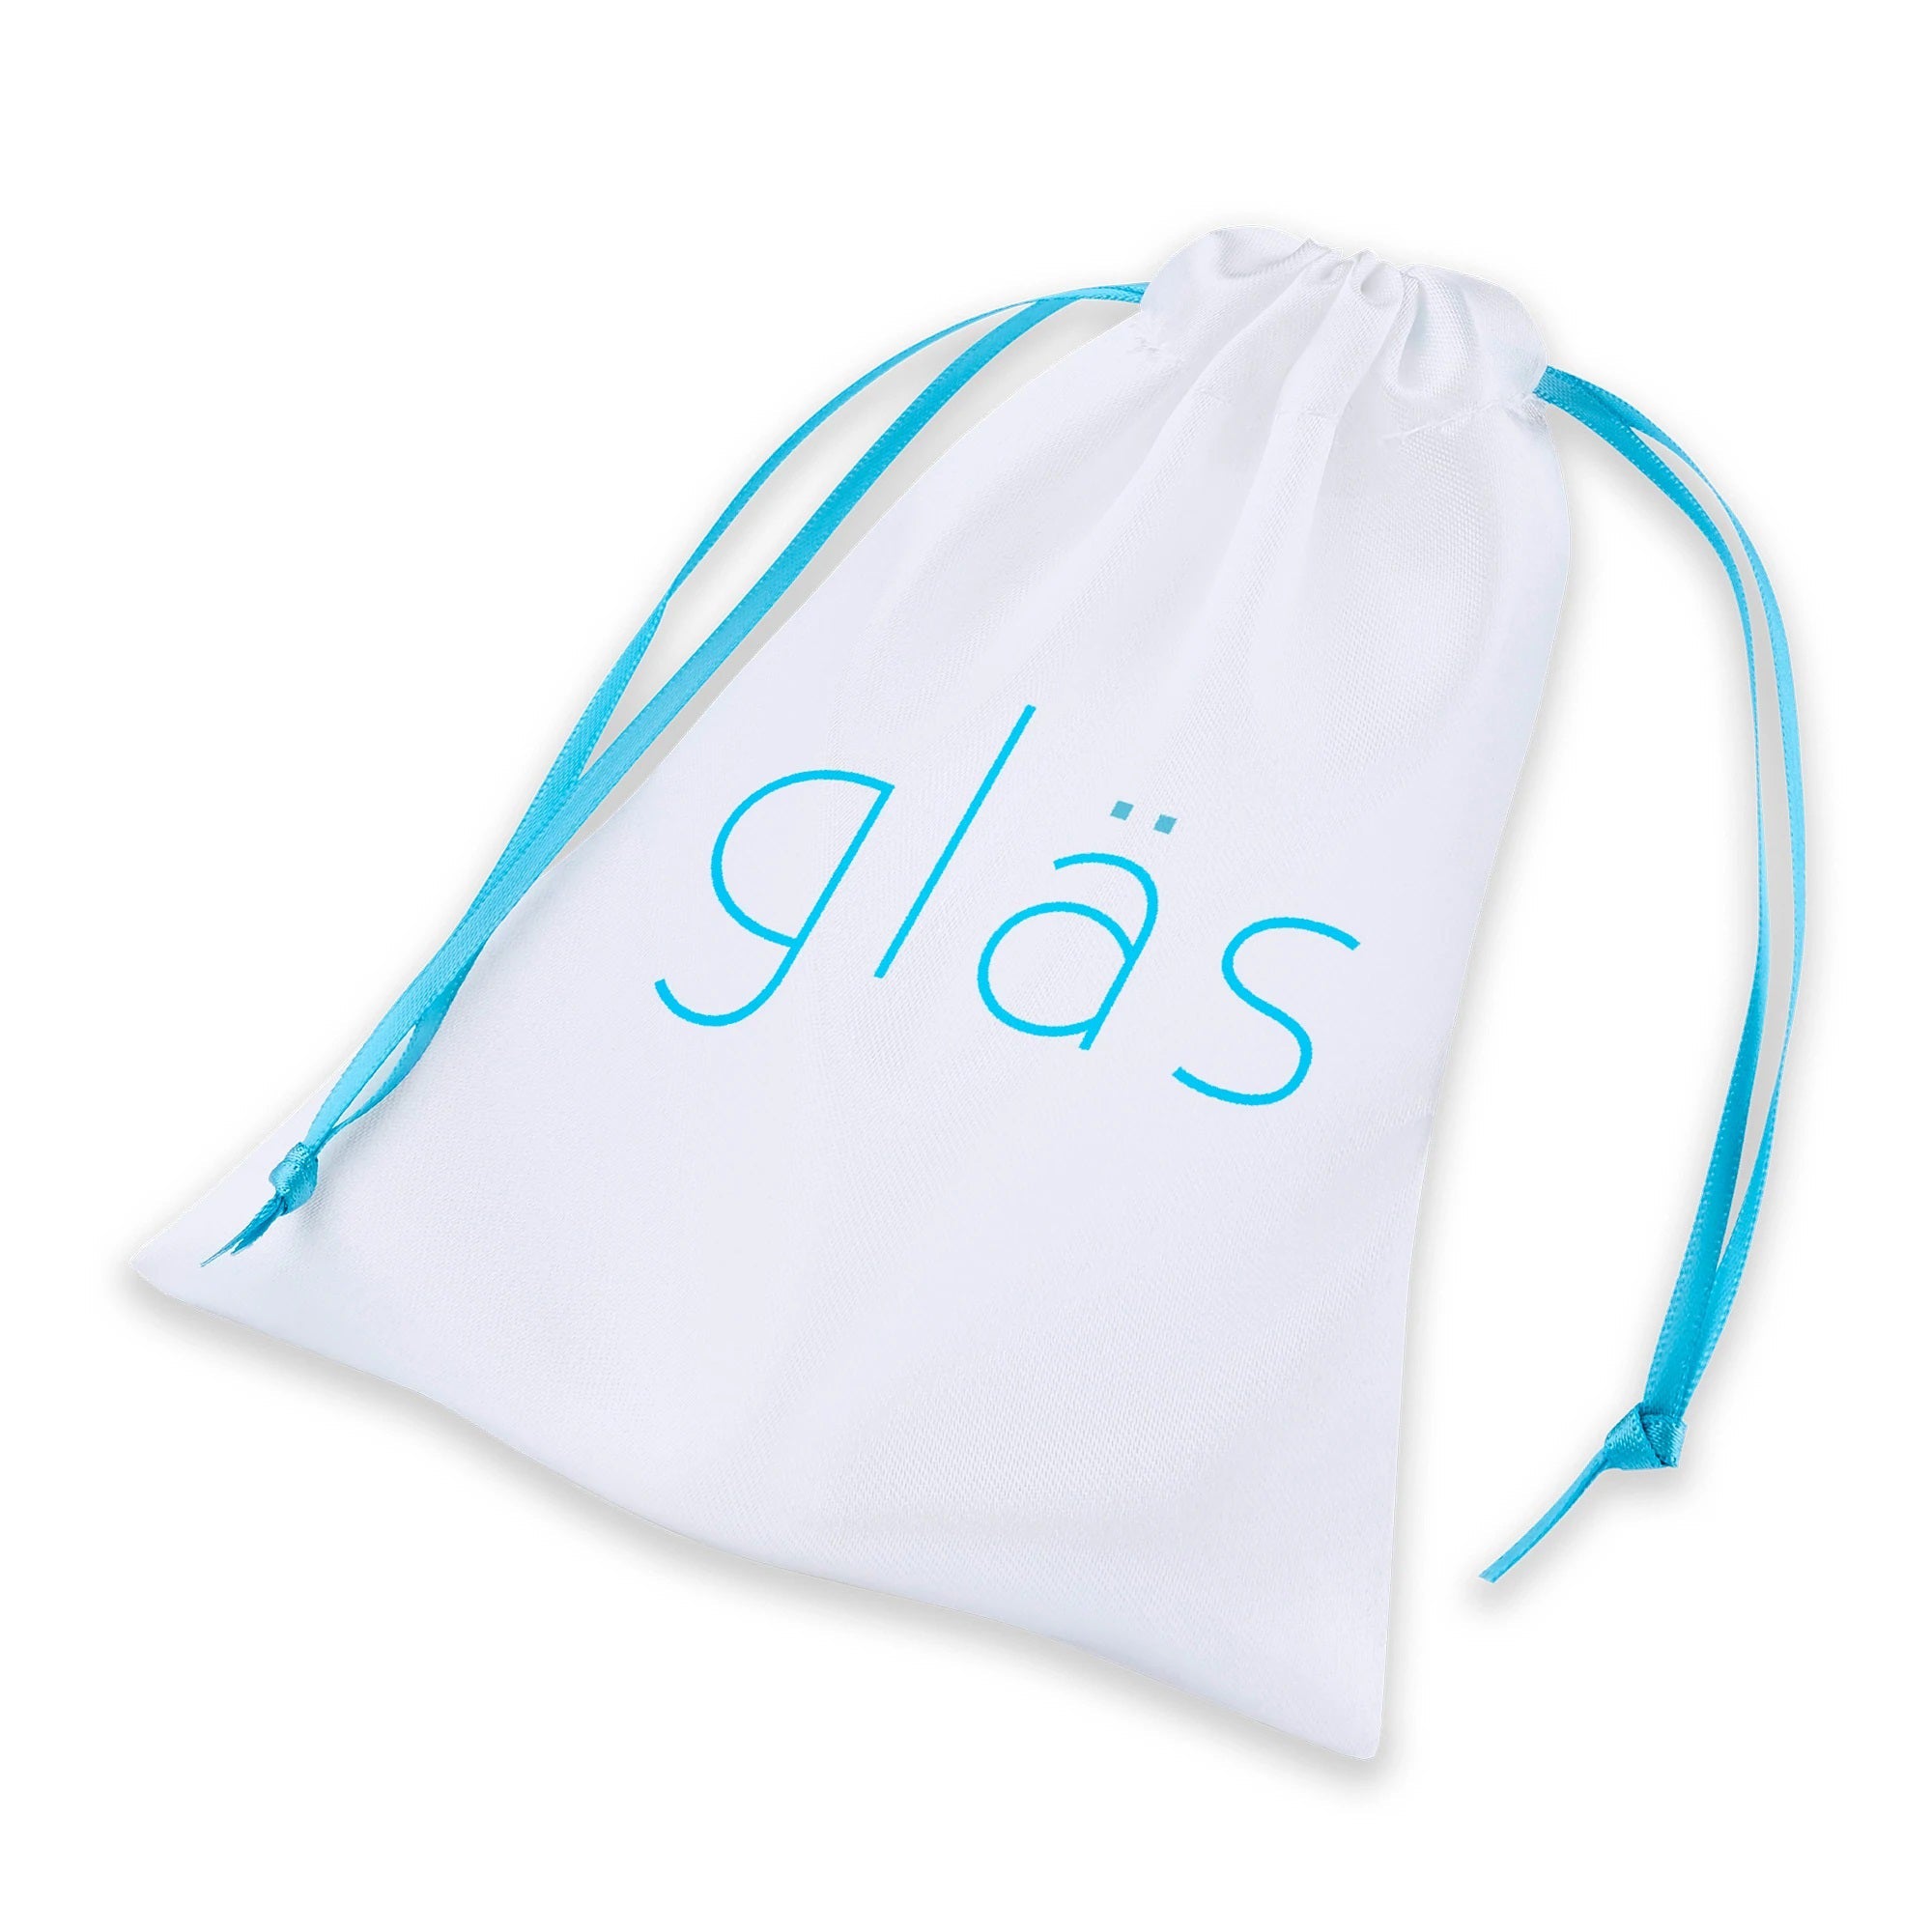 Glas 4 Classic Glass Butt Plug